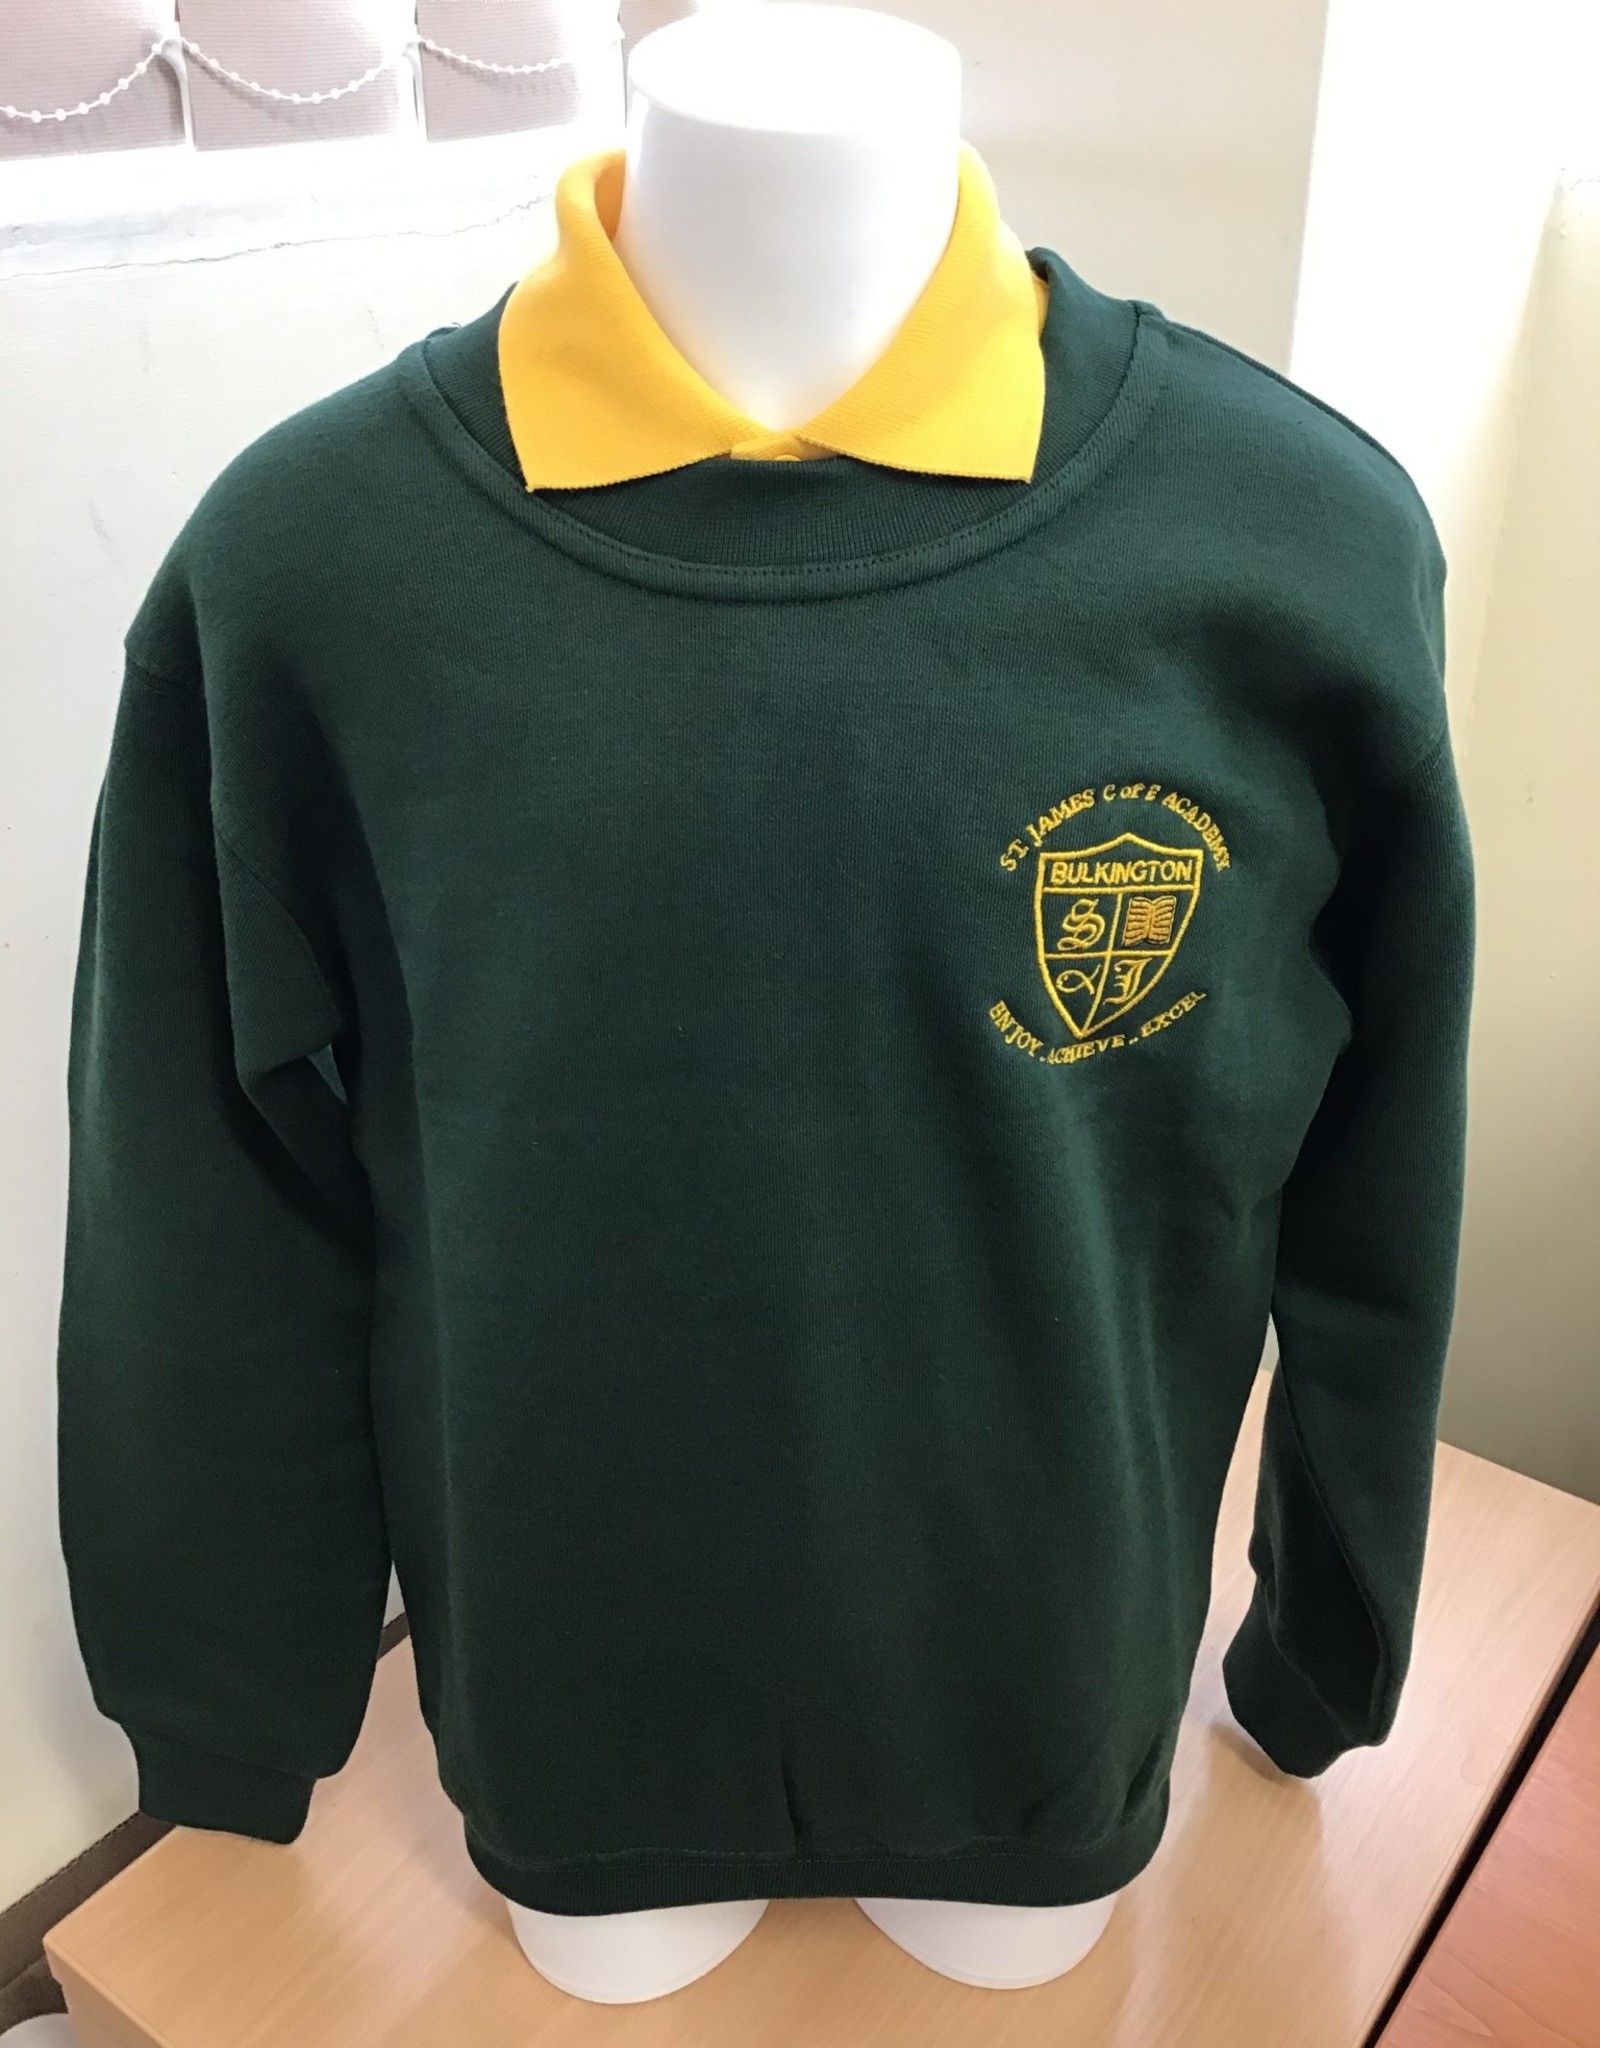 select Sweatshirt Child Size - St James CE Academy